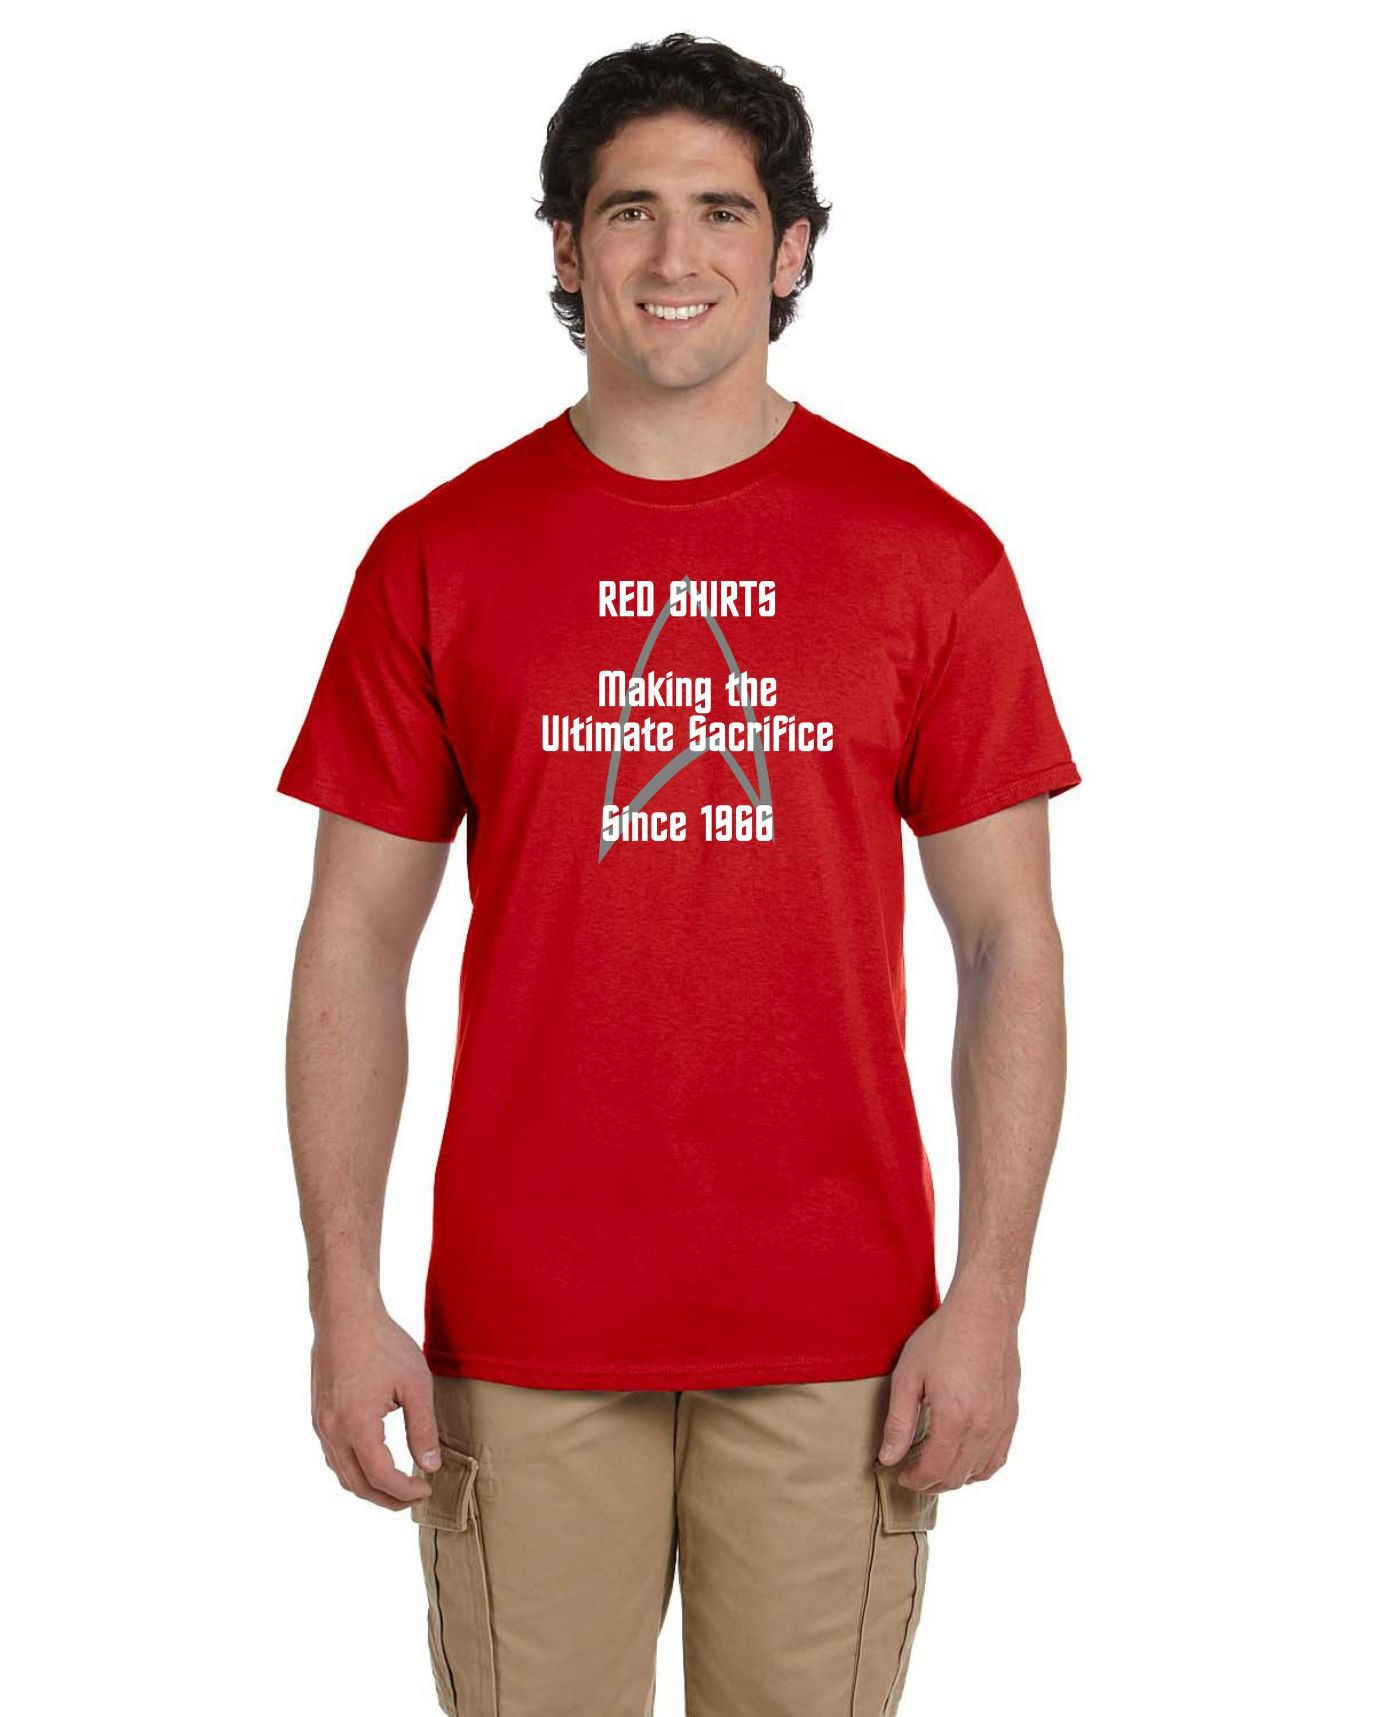 Star Trek Humorous T-Shirt